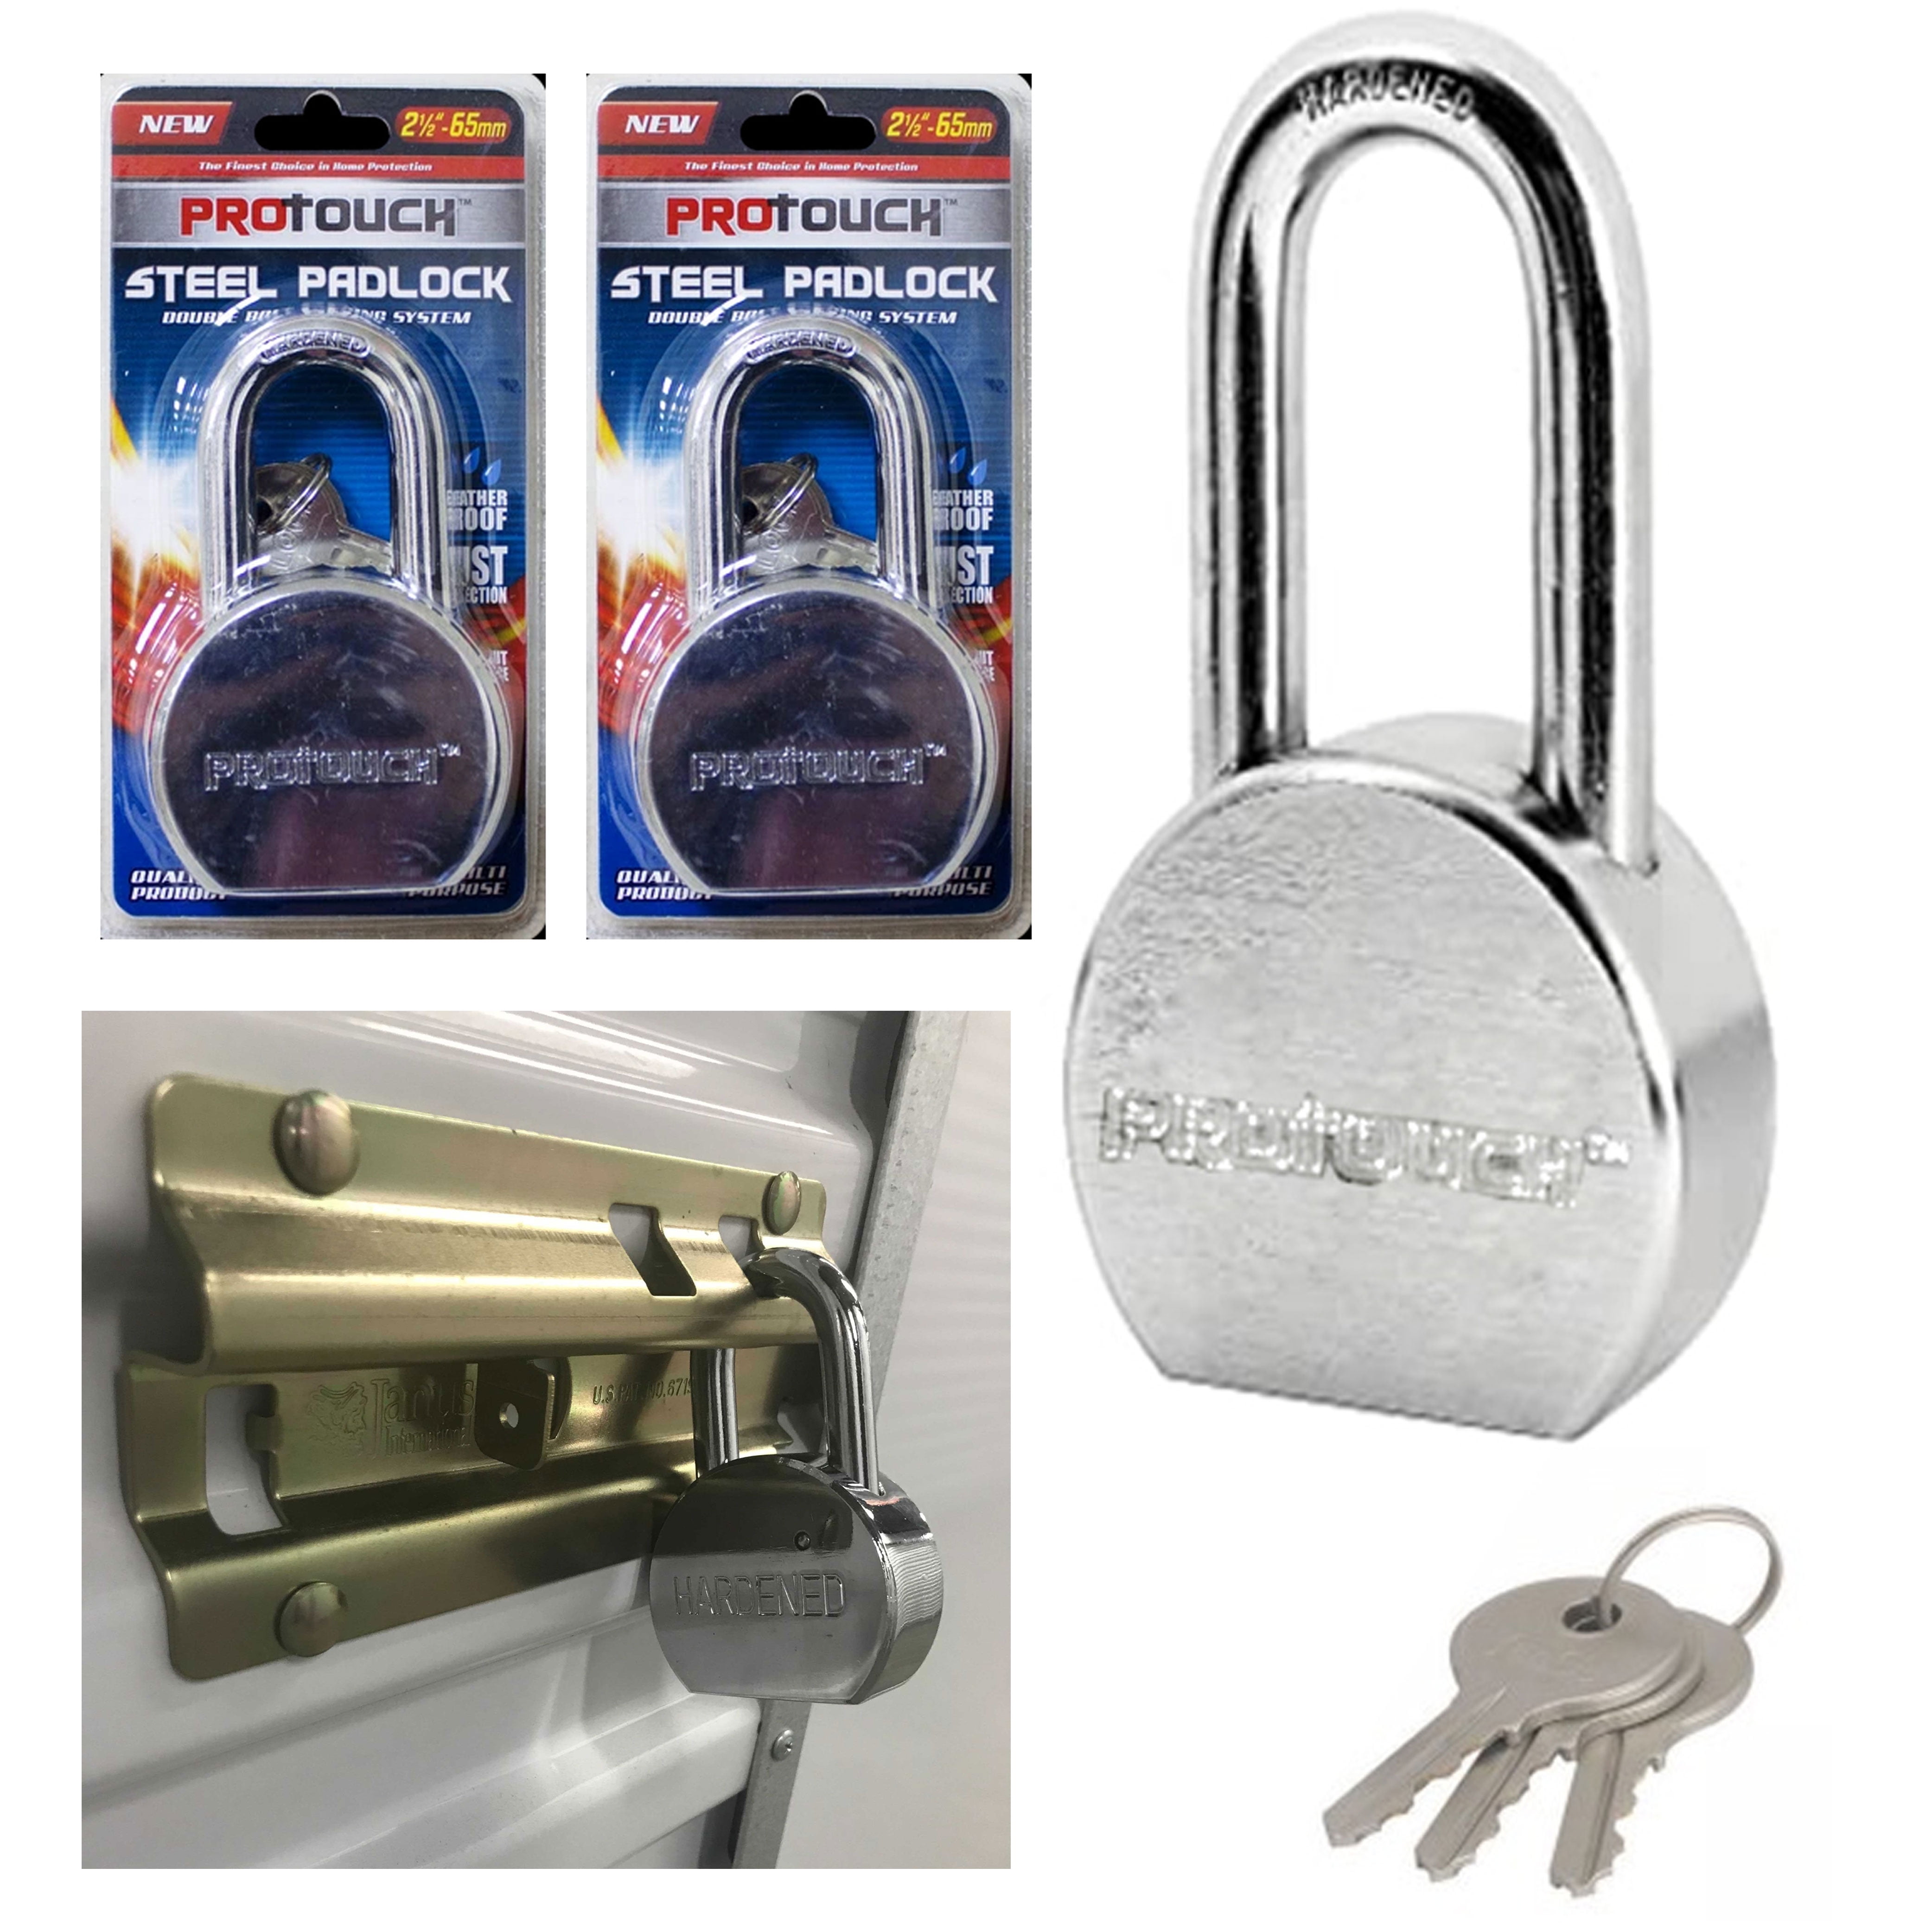 3 Keys 65mm Outdoor High Security Safety Lock Door EXTRA STRONG STEEL PADLOCK 